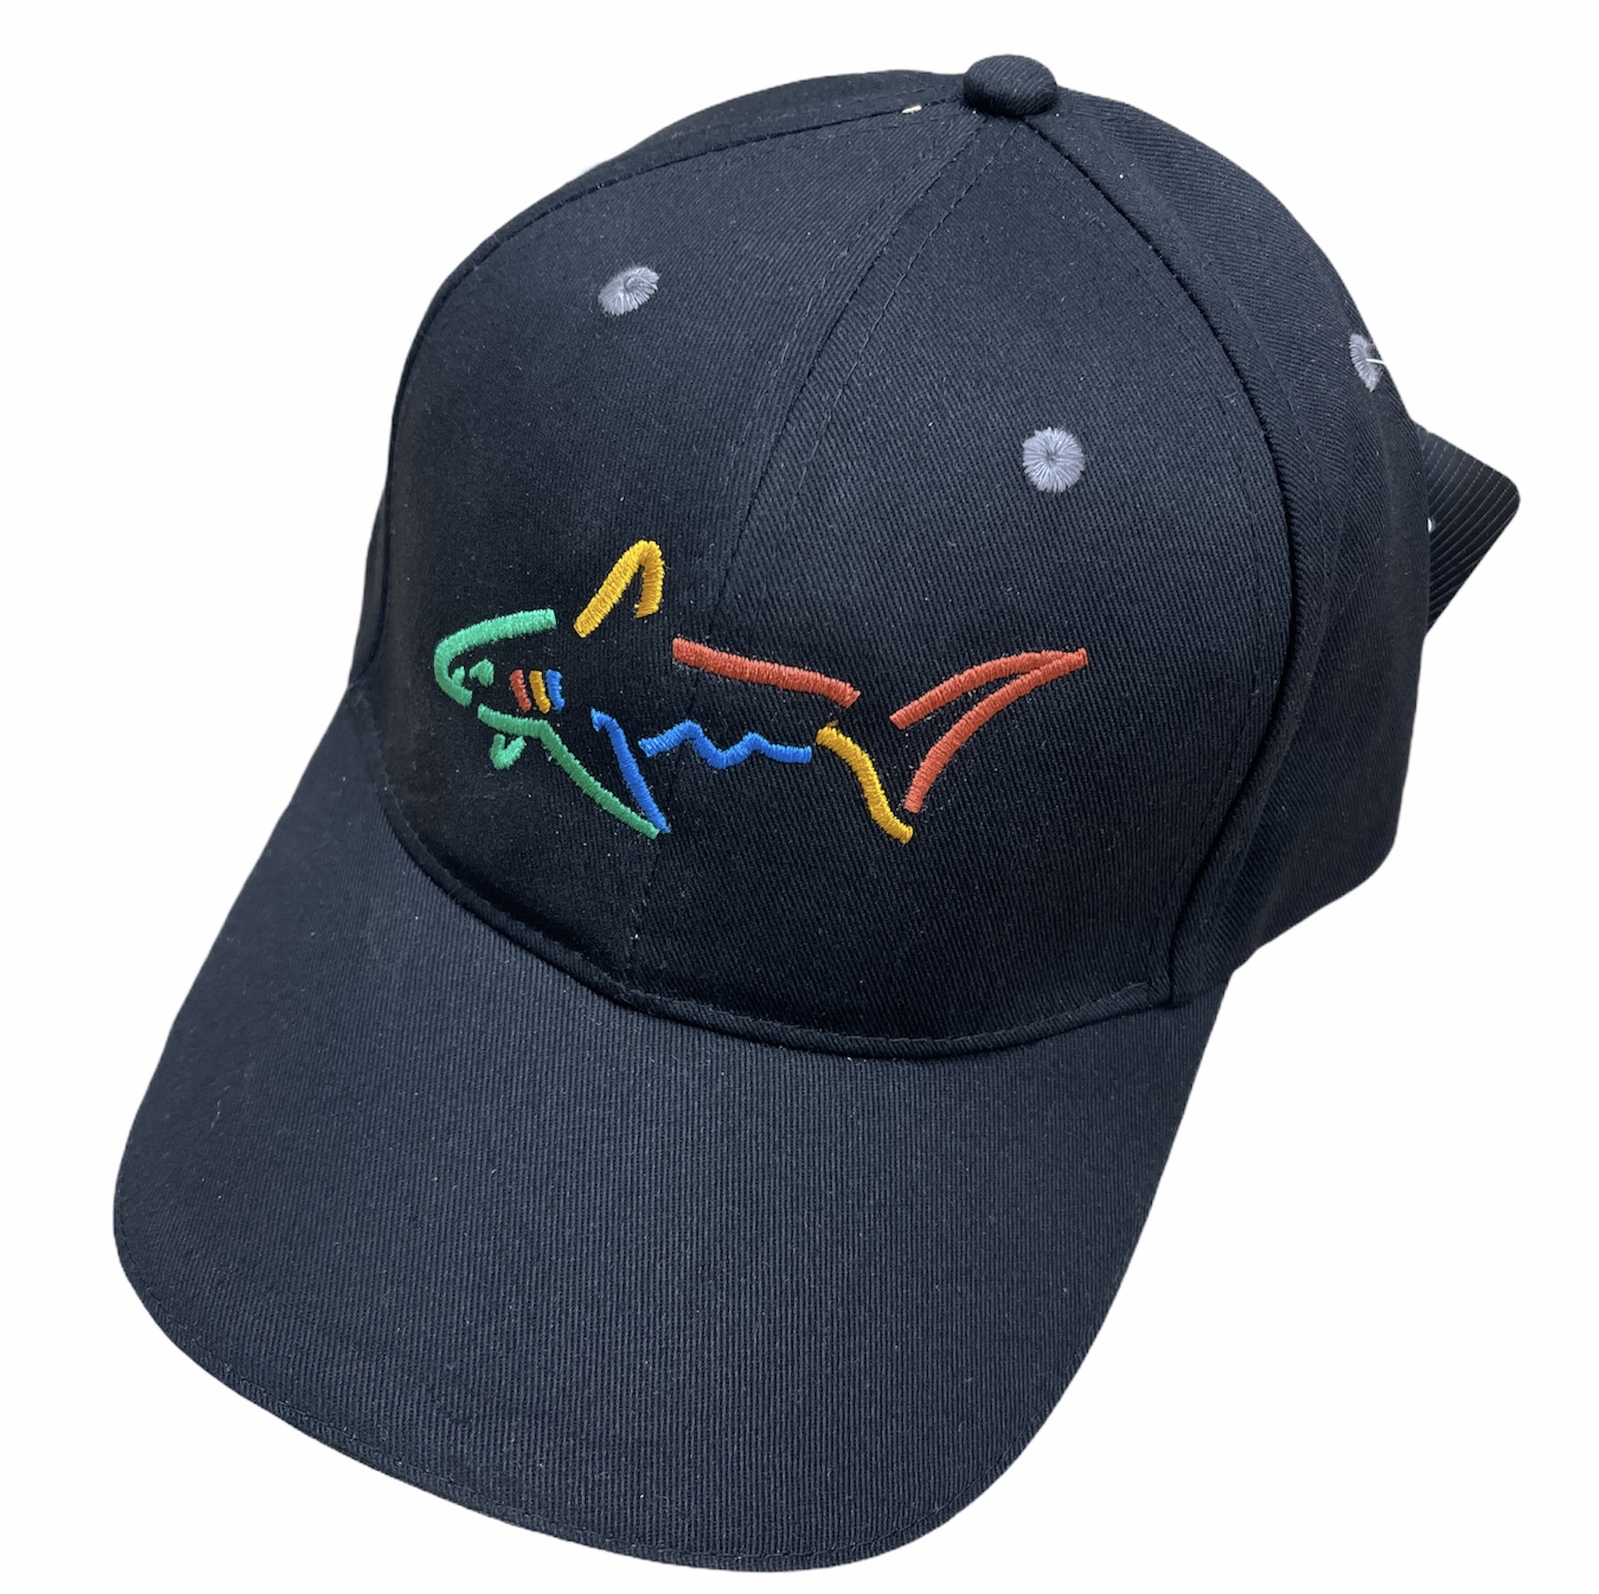 GREG NORMAN Cotton Golf Baseball Cap Hat Adjustable - One Size | eBay